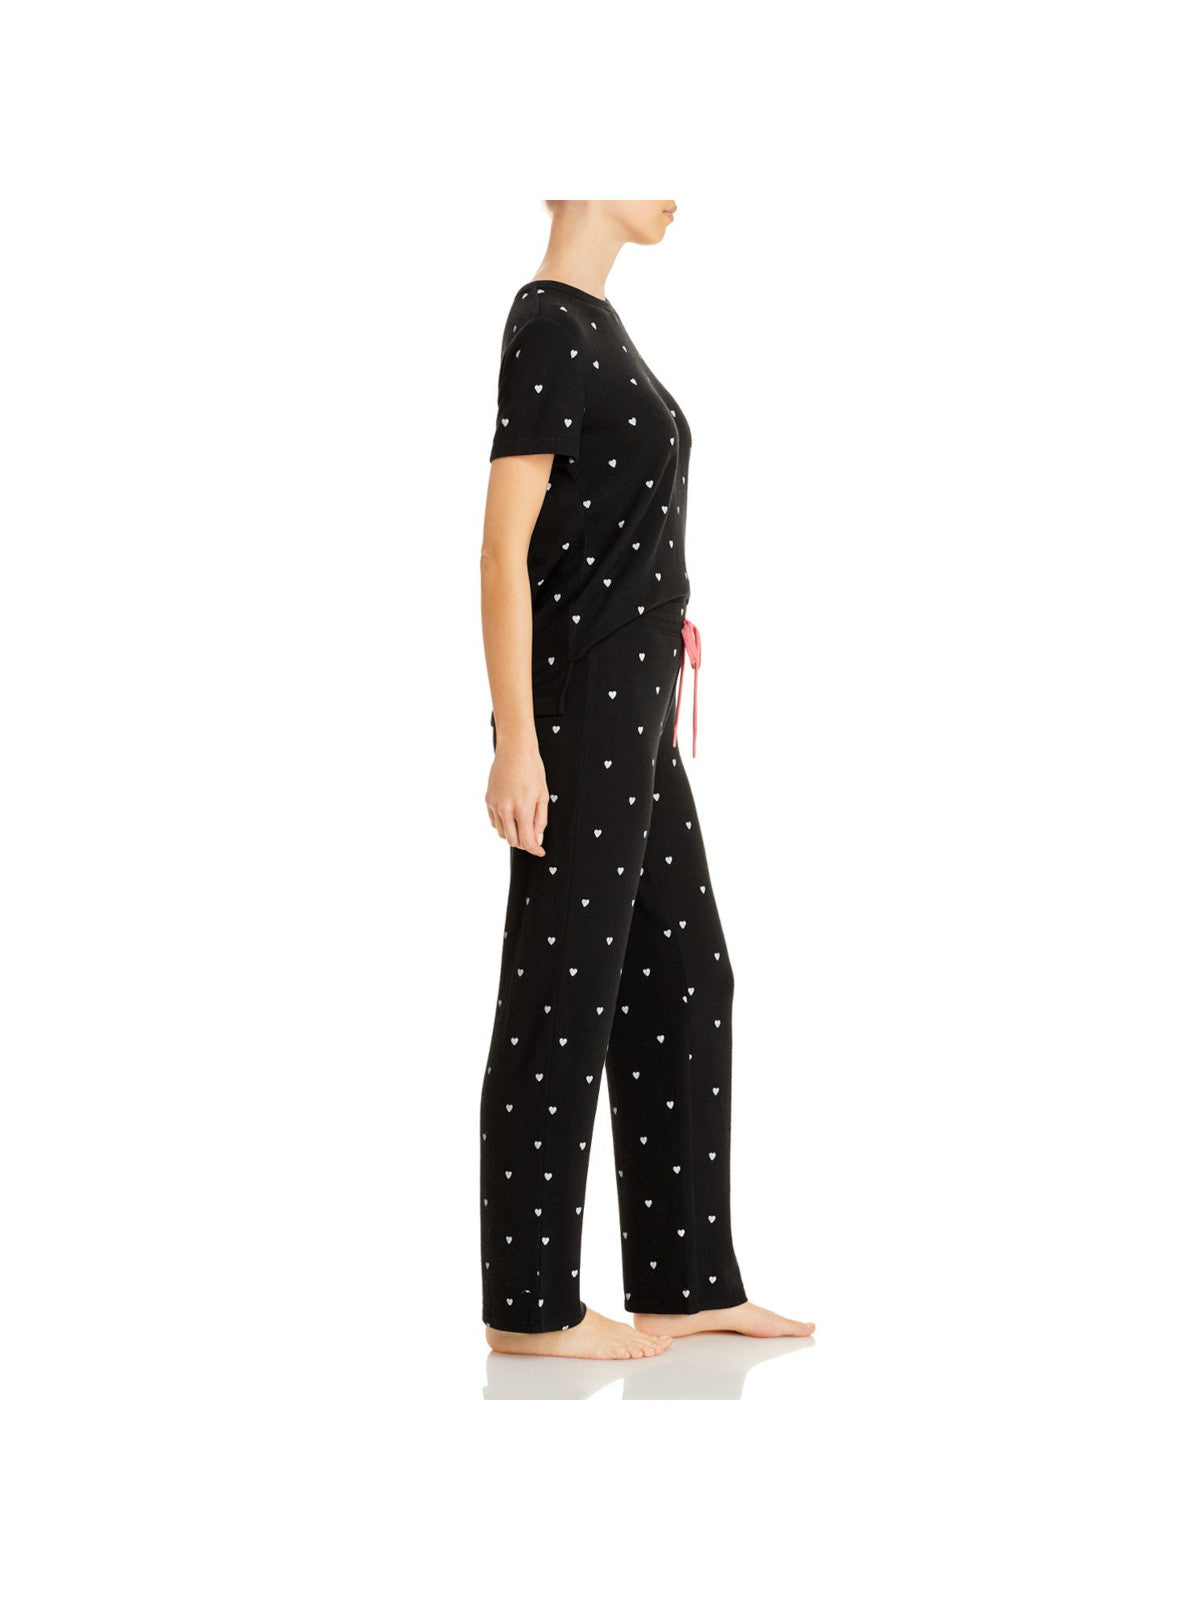 AQUA Womens Black Patterned Drawstring Short Sleeve T-Shirt Top Straight leg Pants Stretch Pajamas S